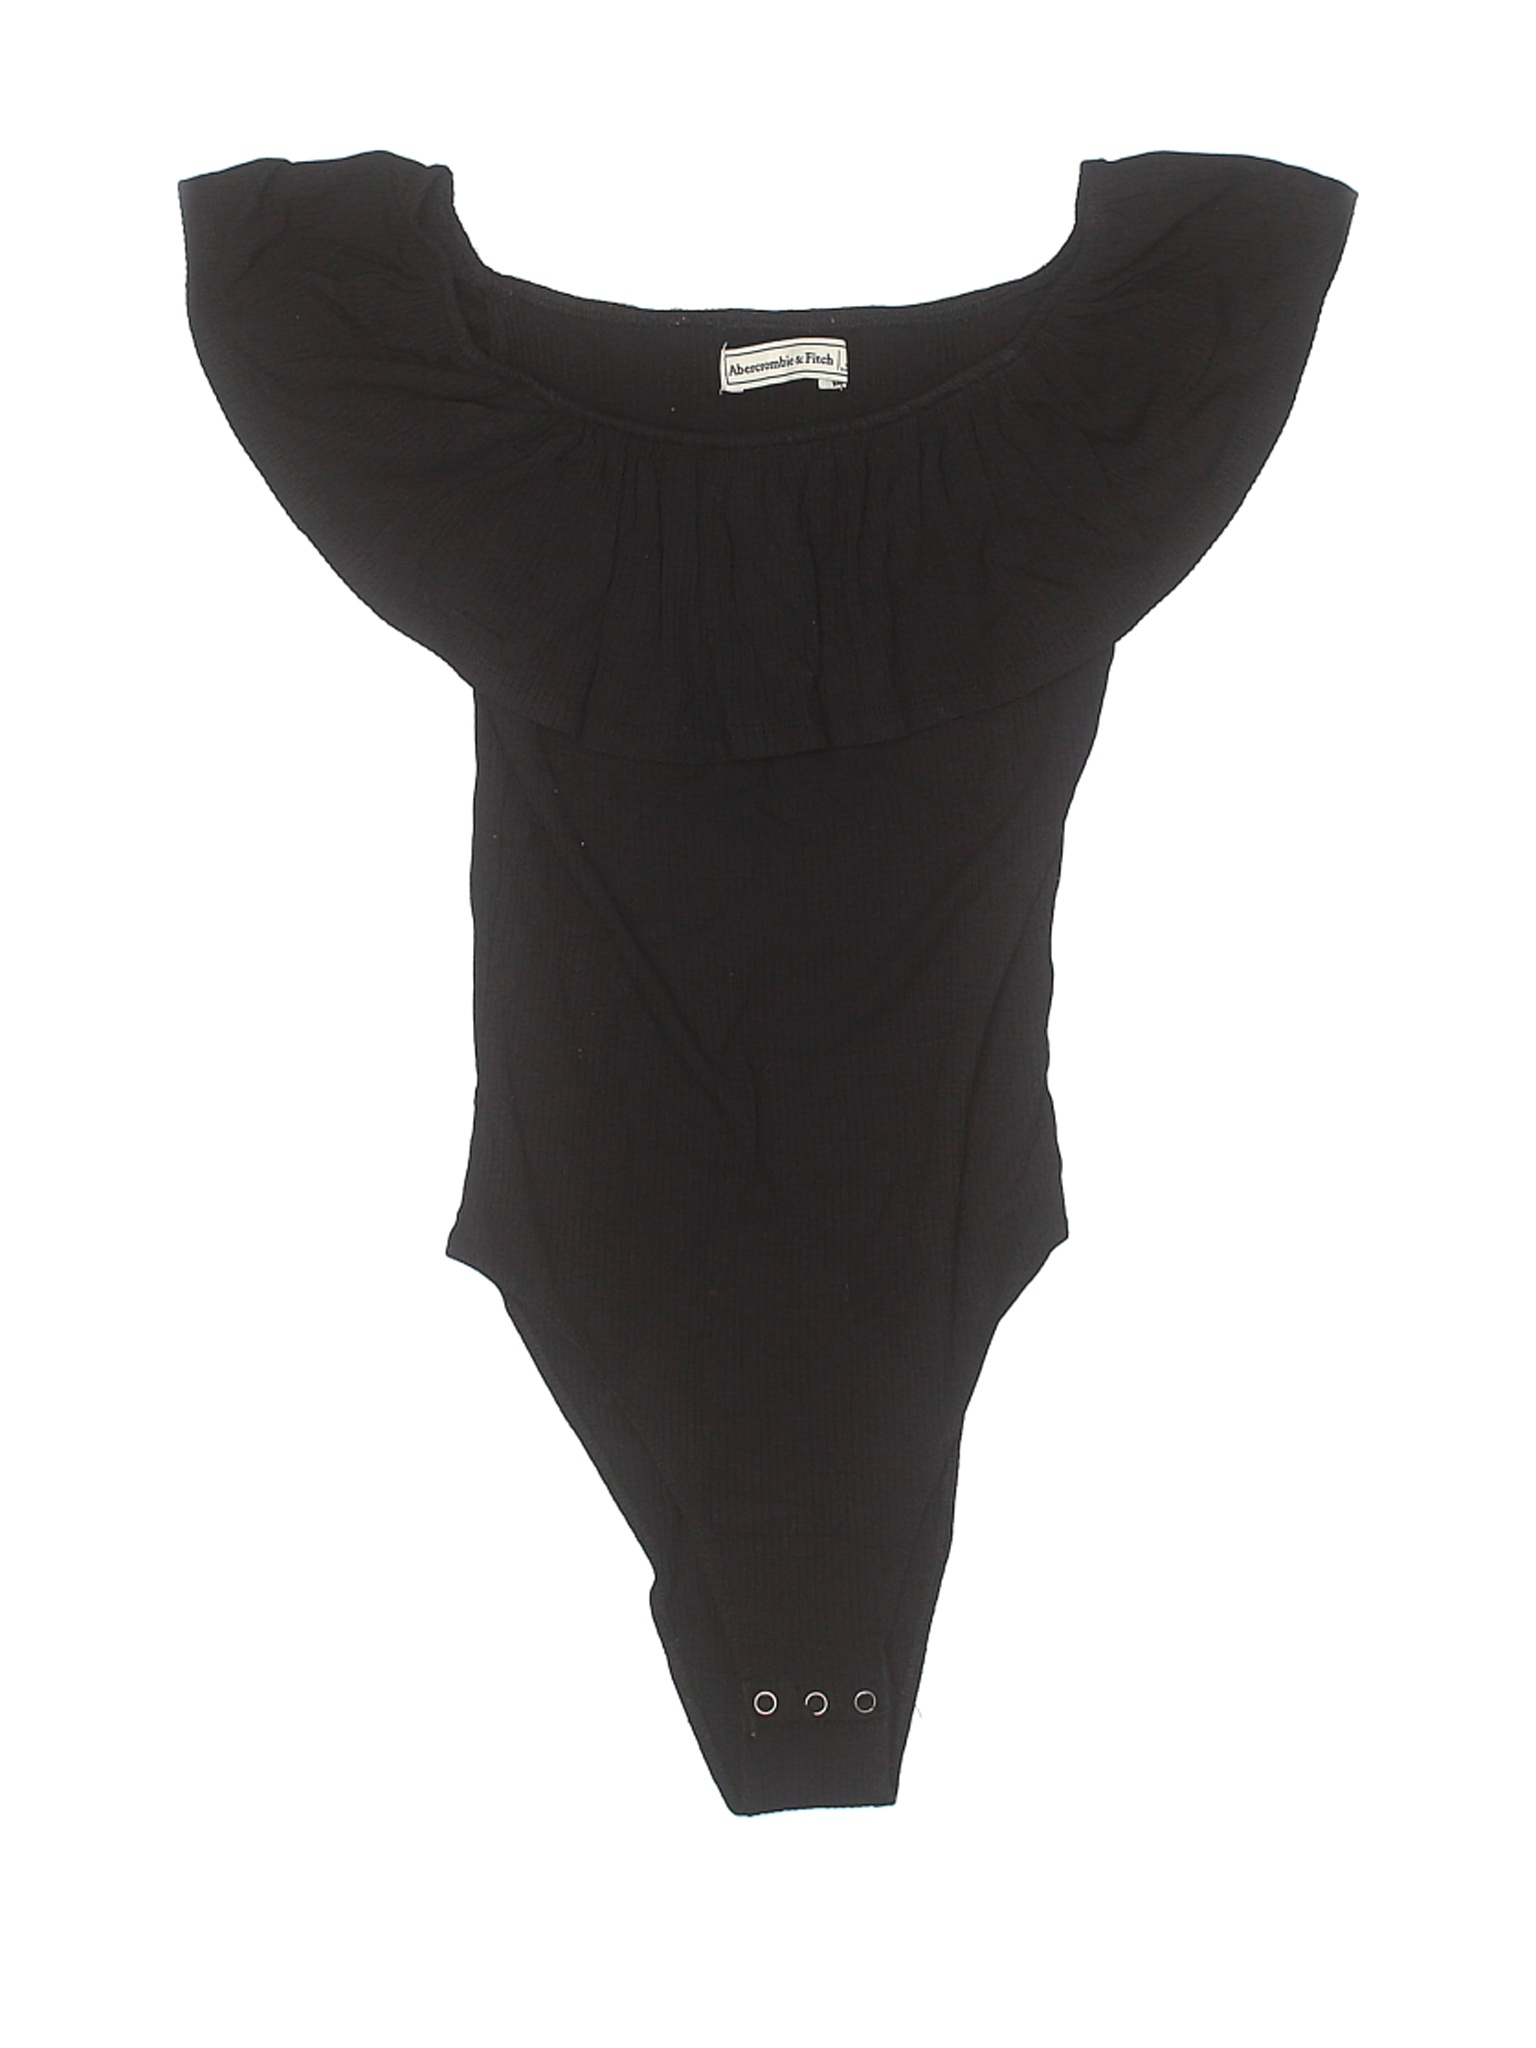 Abercrombie & Fitch Women Black Bodysuit S | eBay